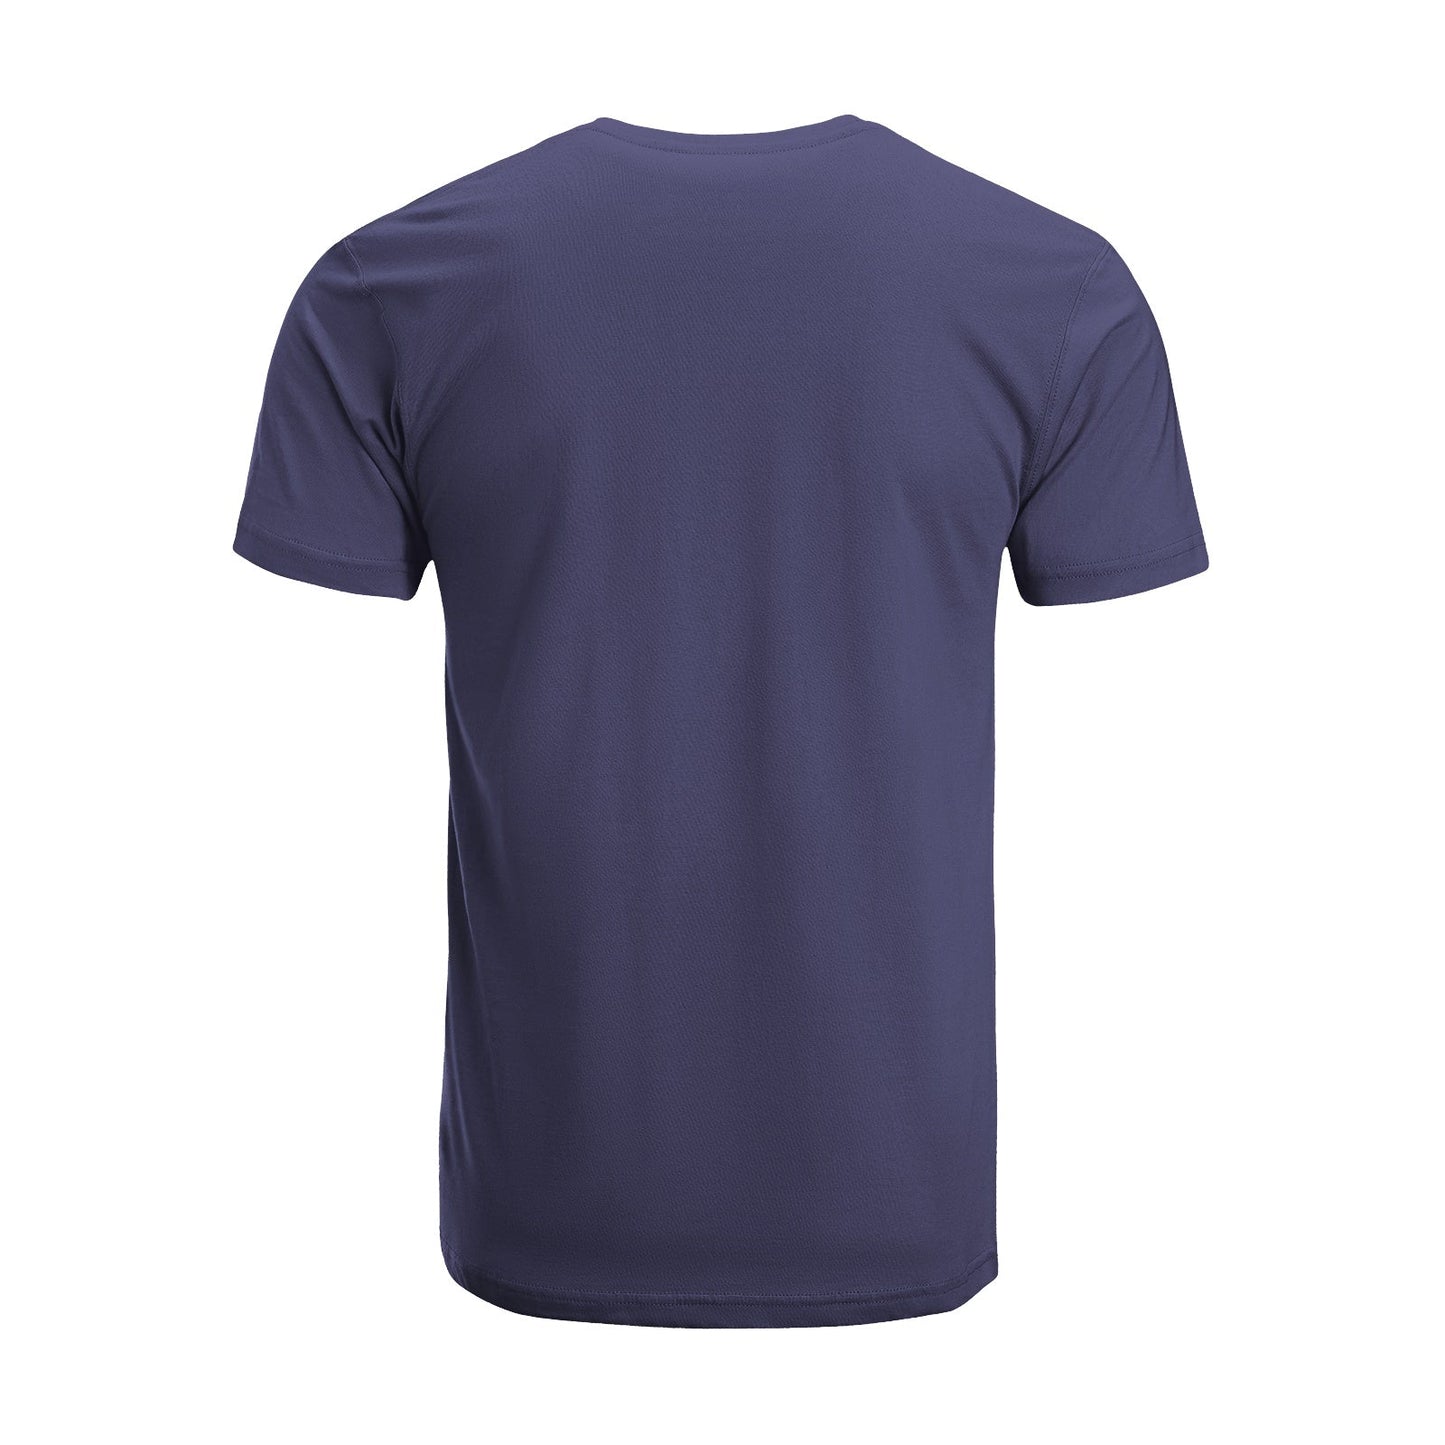 Unisex Short Sleeve Crew Neck Cotton Jersey T-Shirt MOM 32